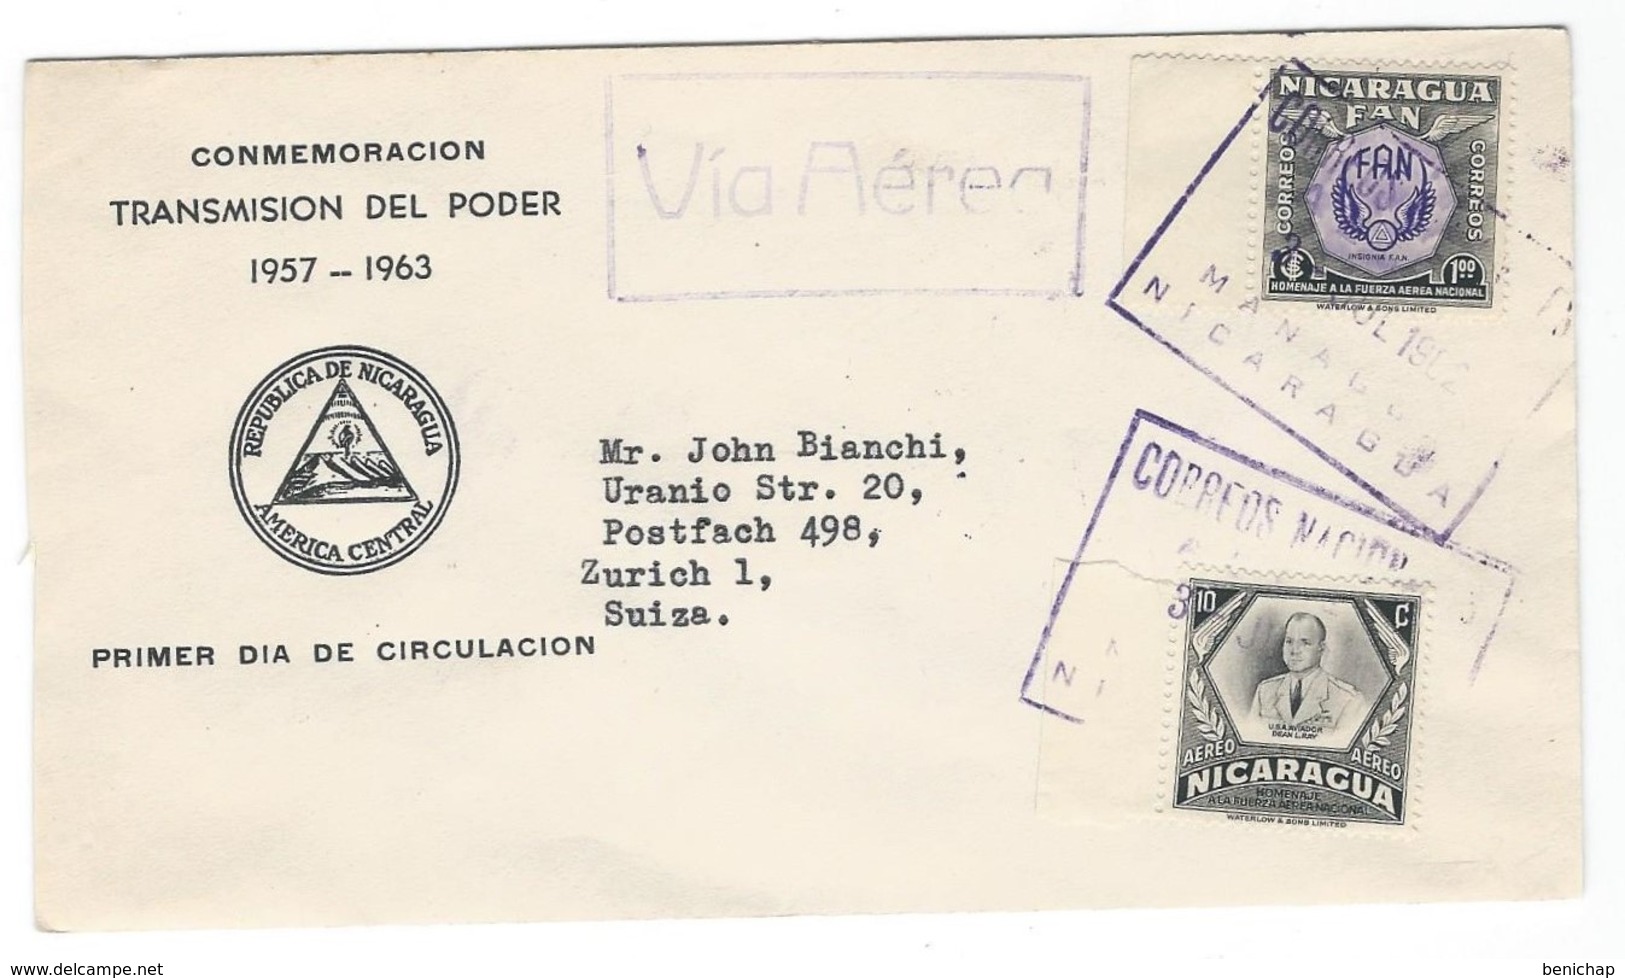 Covers Correos Aero Nicaragua - Managua - Zurich - Suiza - Commemoracion Transmission Del Poder 1957-1963 - Nicaragua